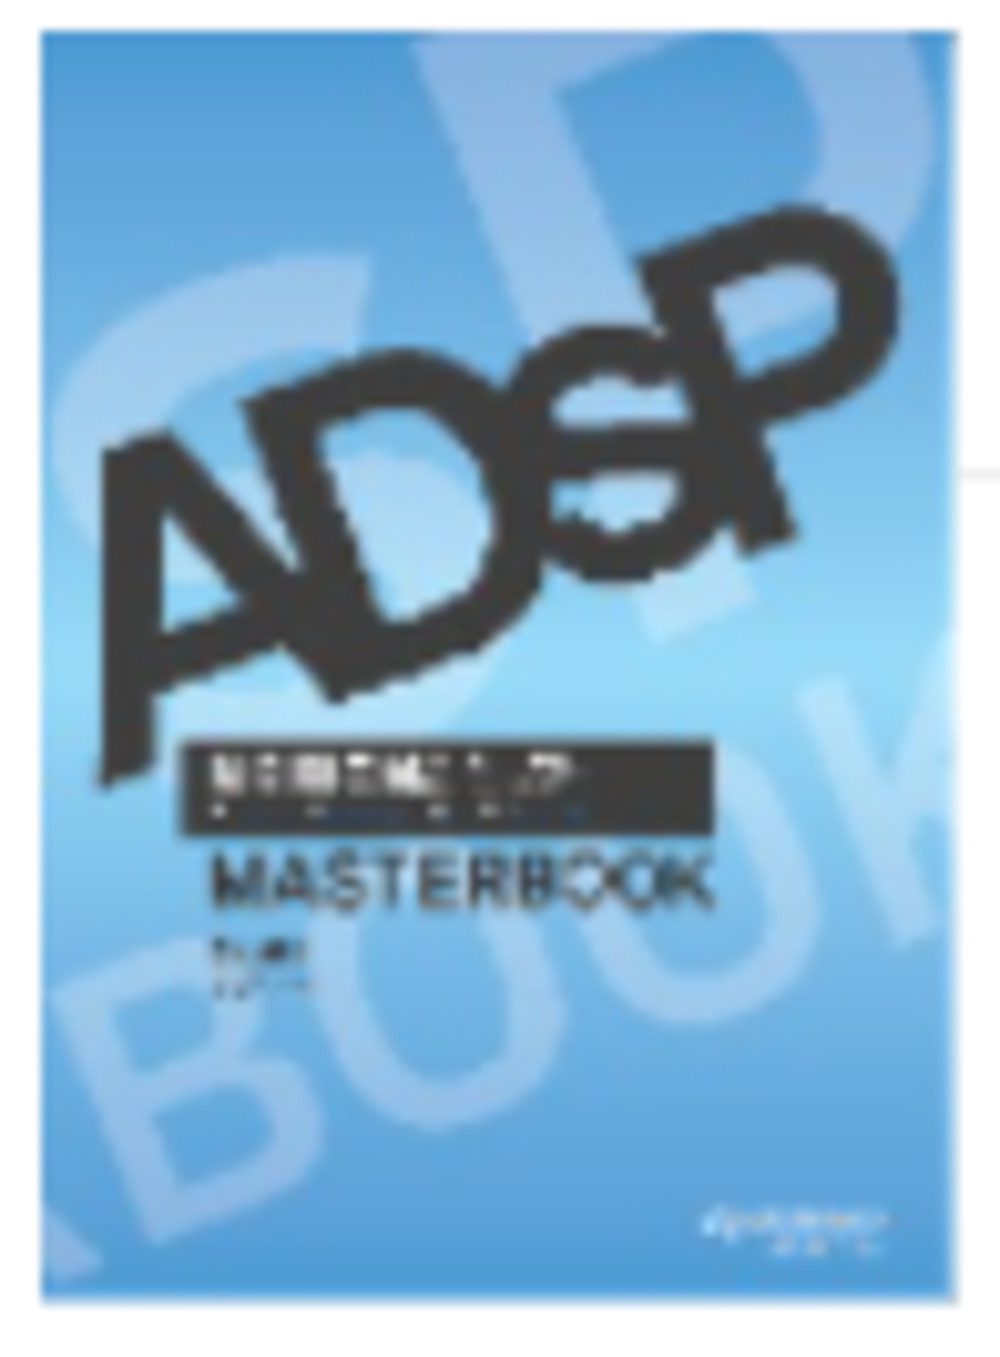 ADsP Masterbook